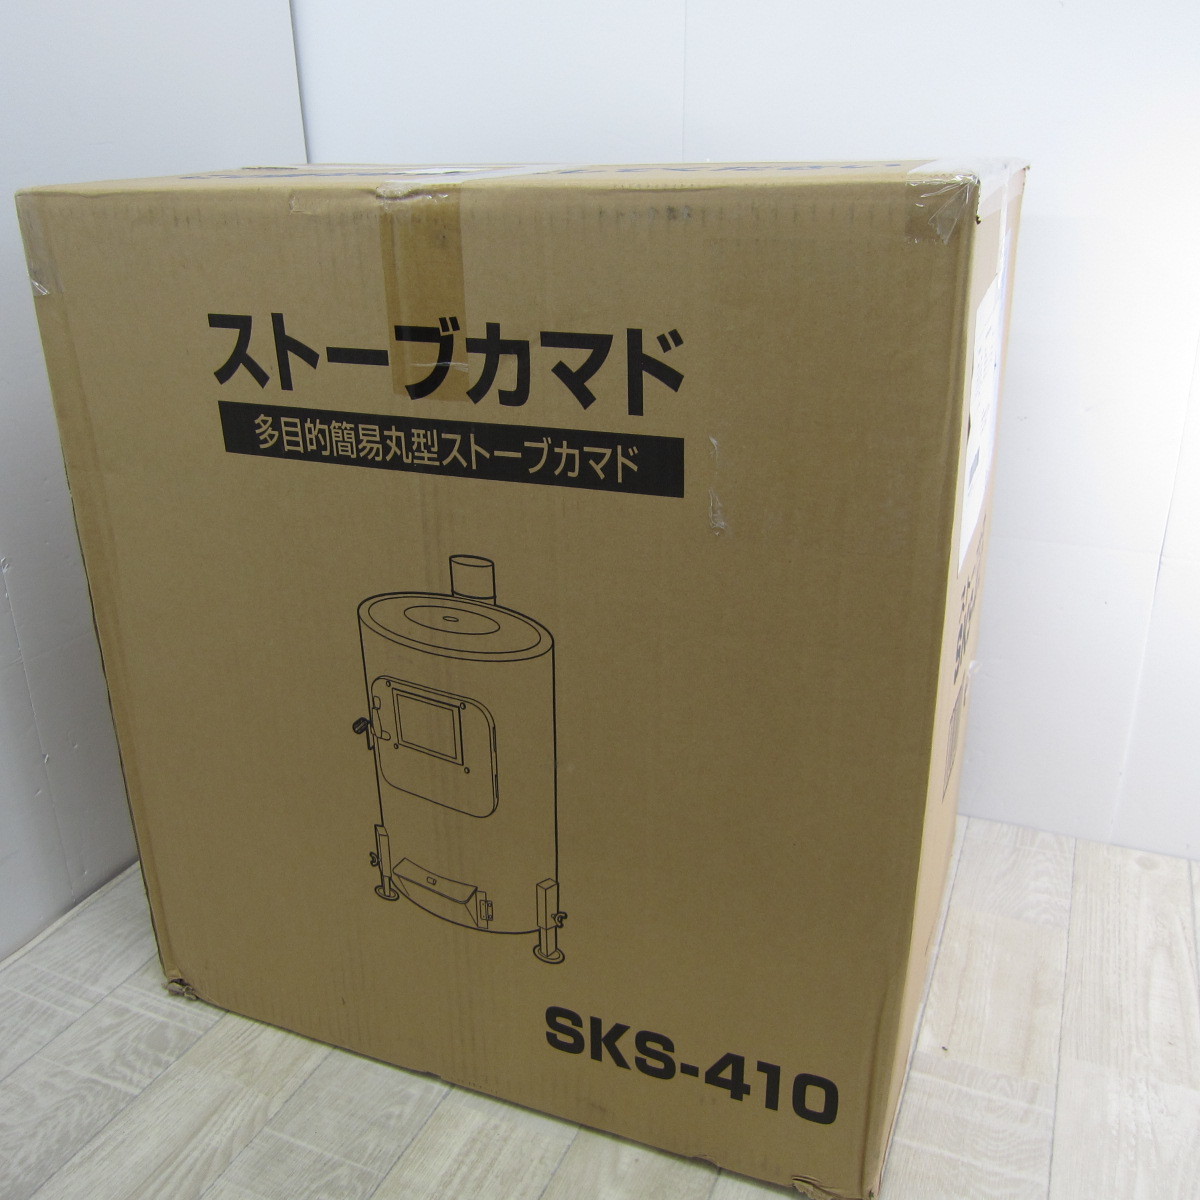 PS2004【未使用】ホンマ製作所 ストーブカマド 幅40.5×奥行55×高さ68.5cm SKS-410